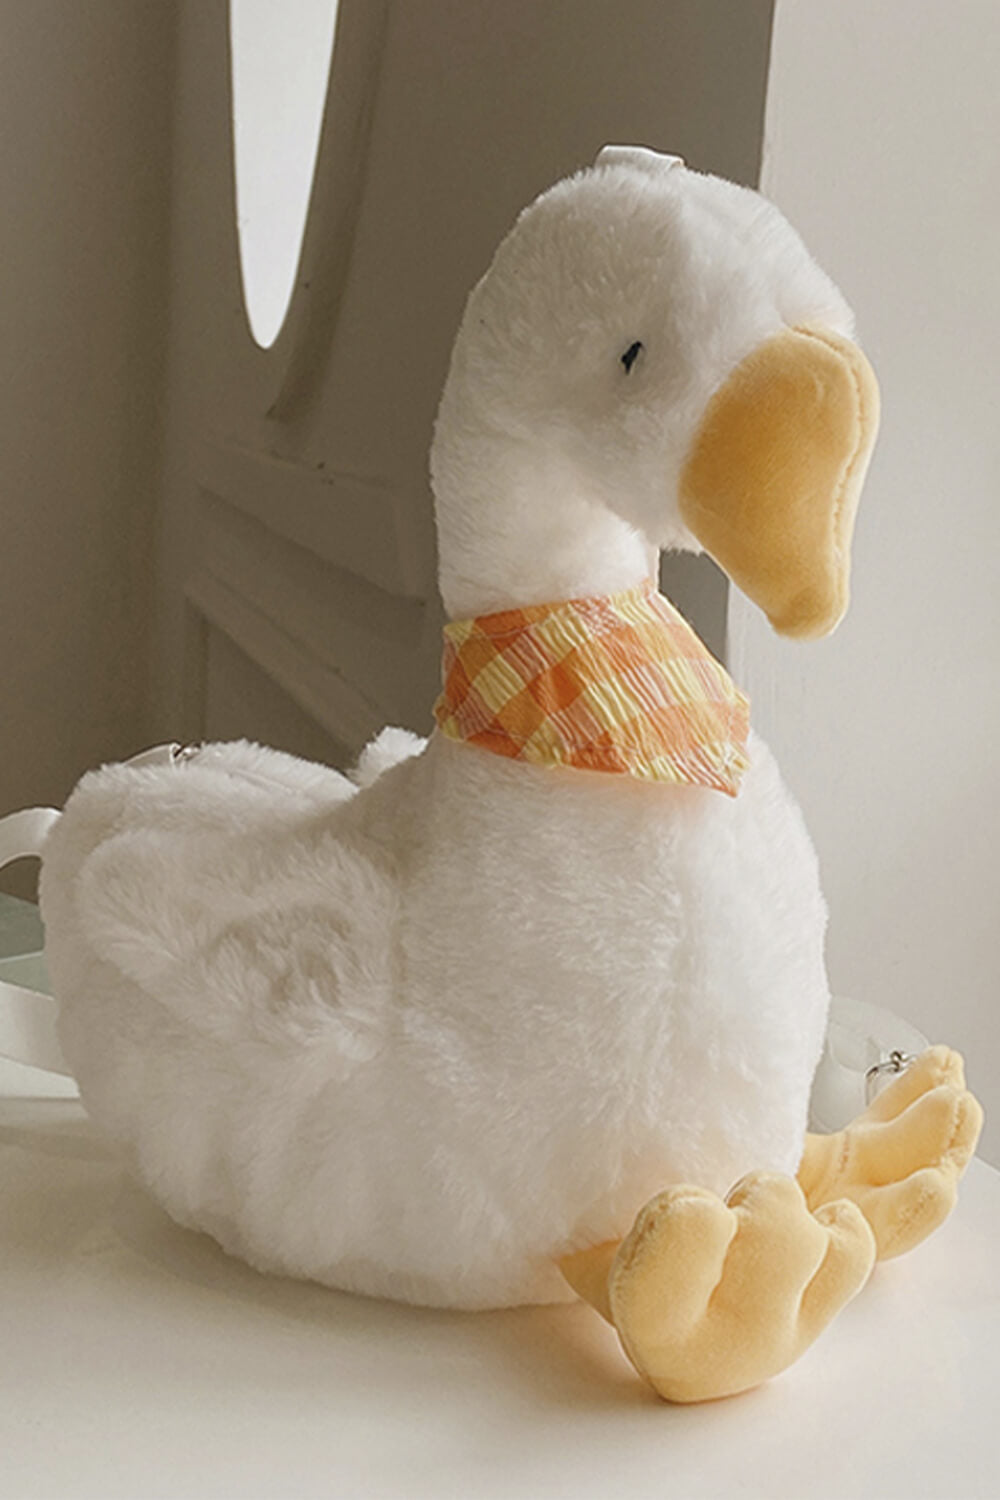 Cute Detective Duck Stuffed Animal Bag Charm